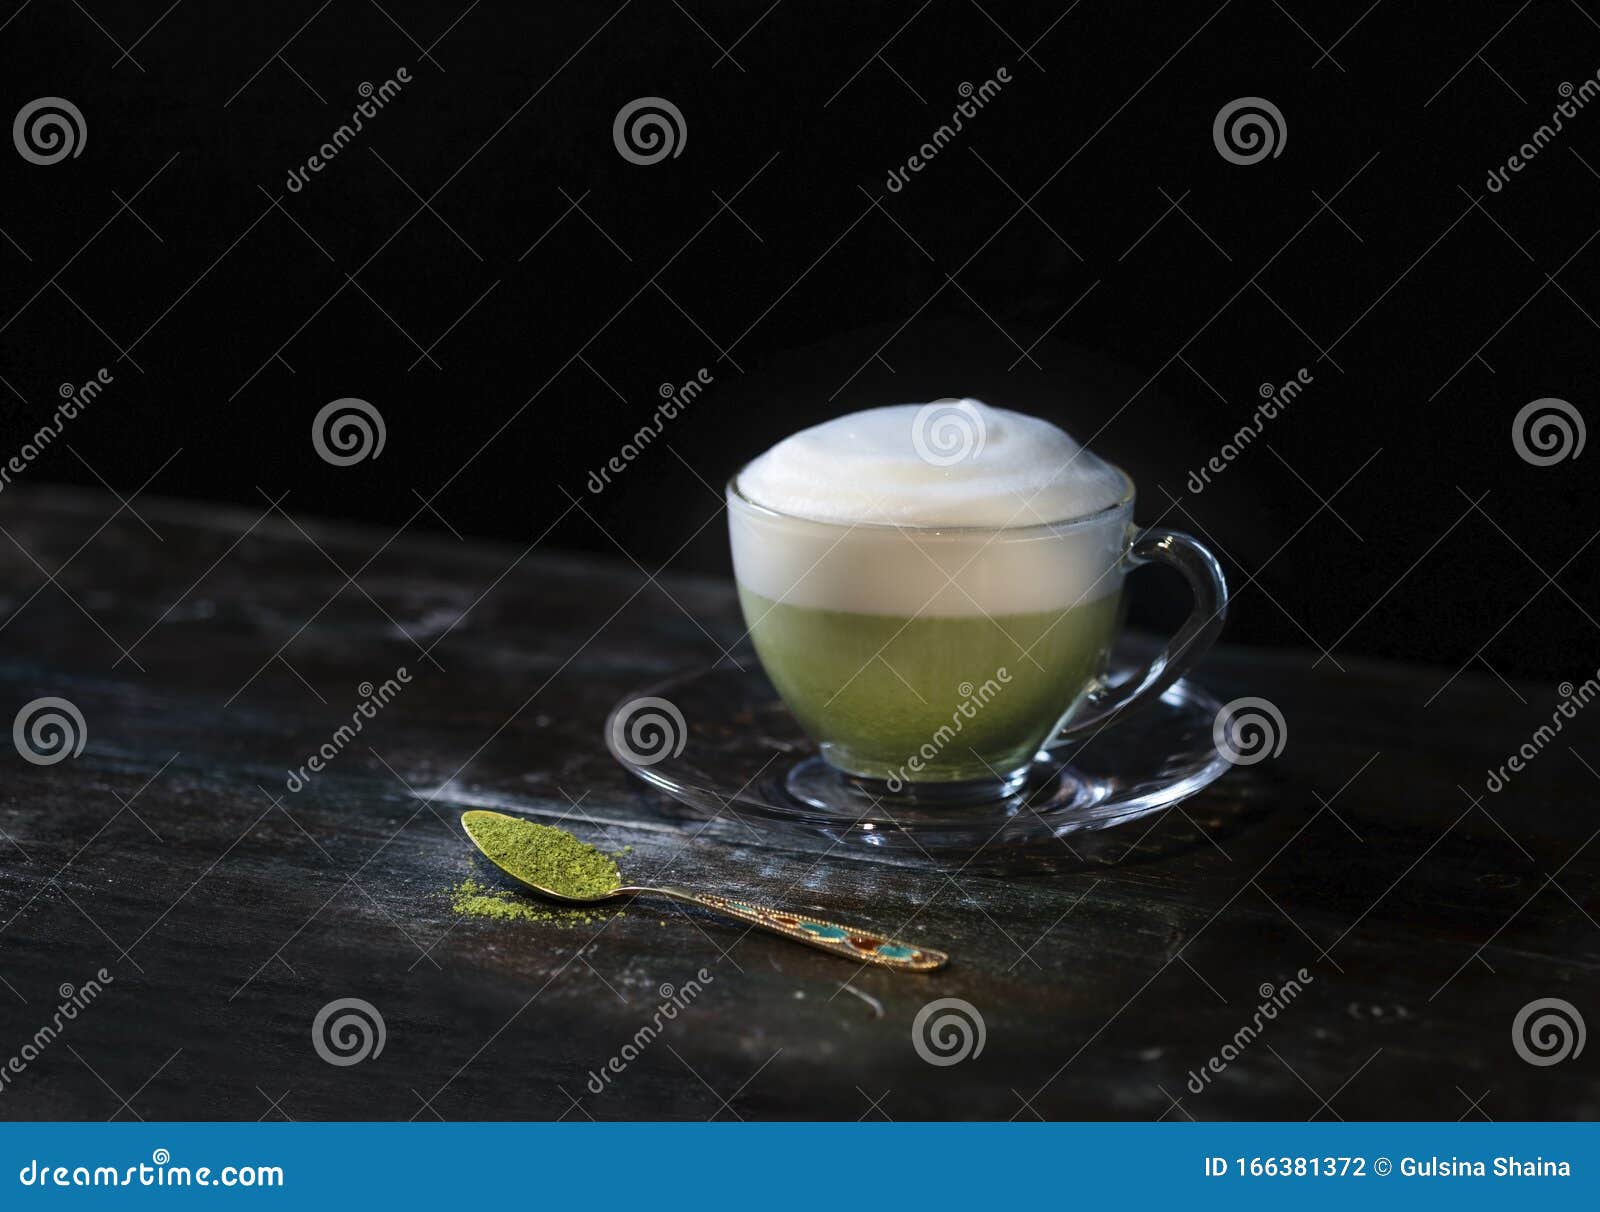 hot matcha green tea latte in a cupon a dark background. fashionable energy tea